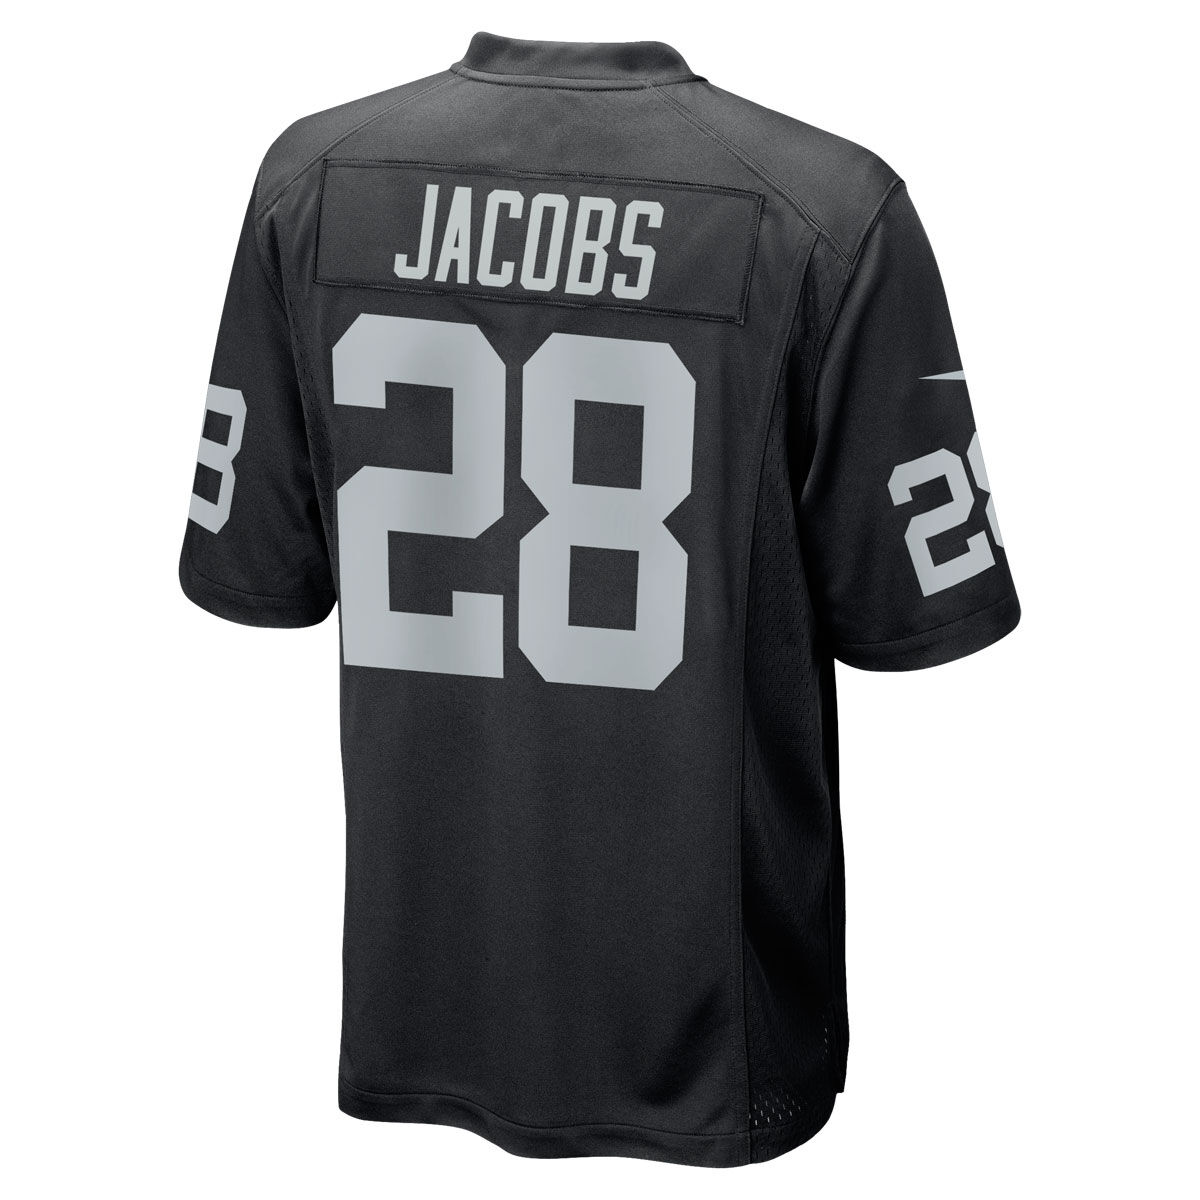 Las Vegas Raiders Josh Jacobs Mens Home Jersey Black S